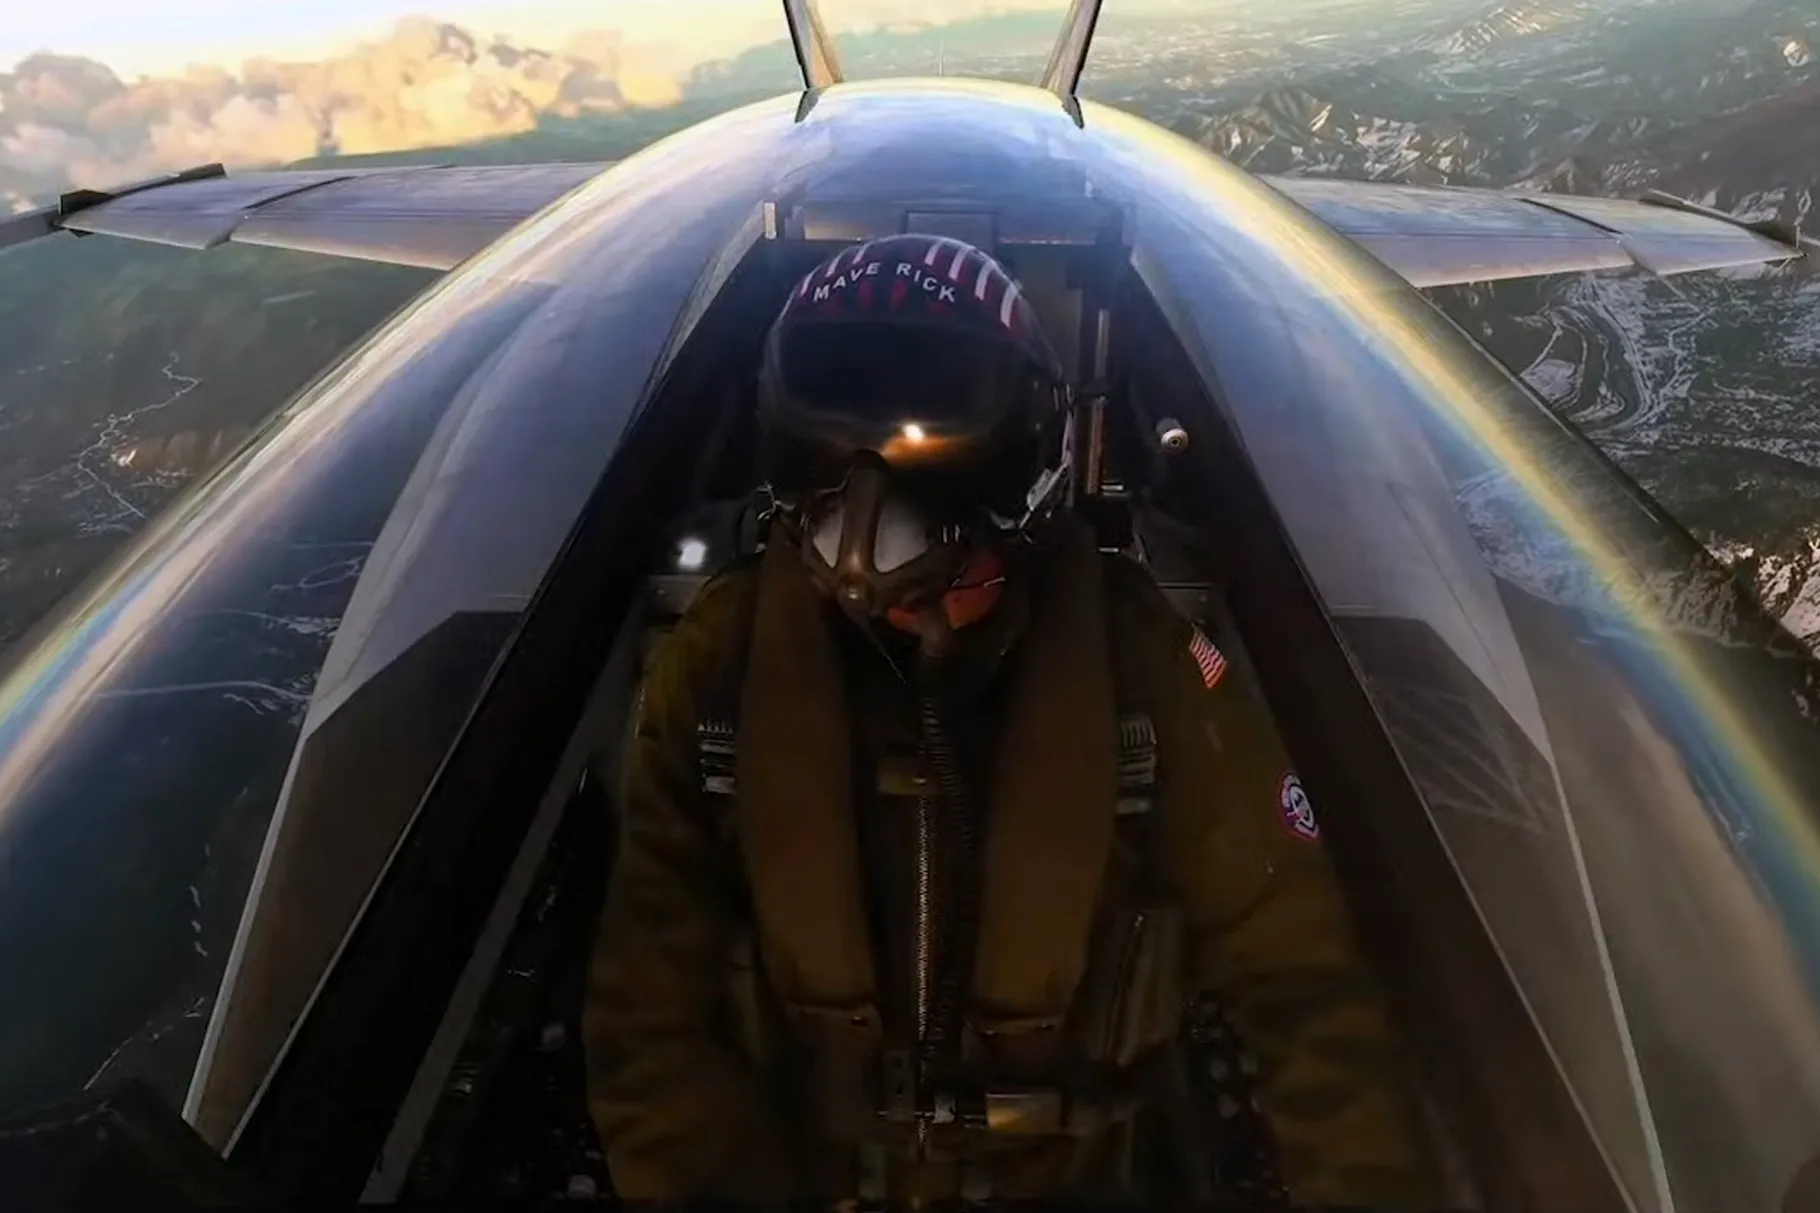 Microsoft เลื่อนส่วนเสริมเกม Flight Simulator “Top Gun” รอเปิดตัวพร้อมหนังปีหน้า!